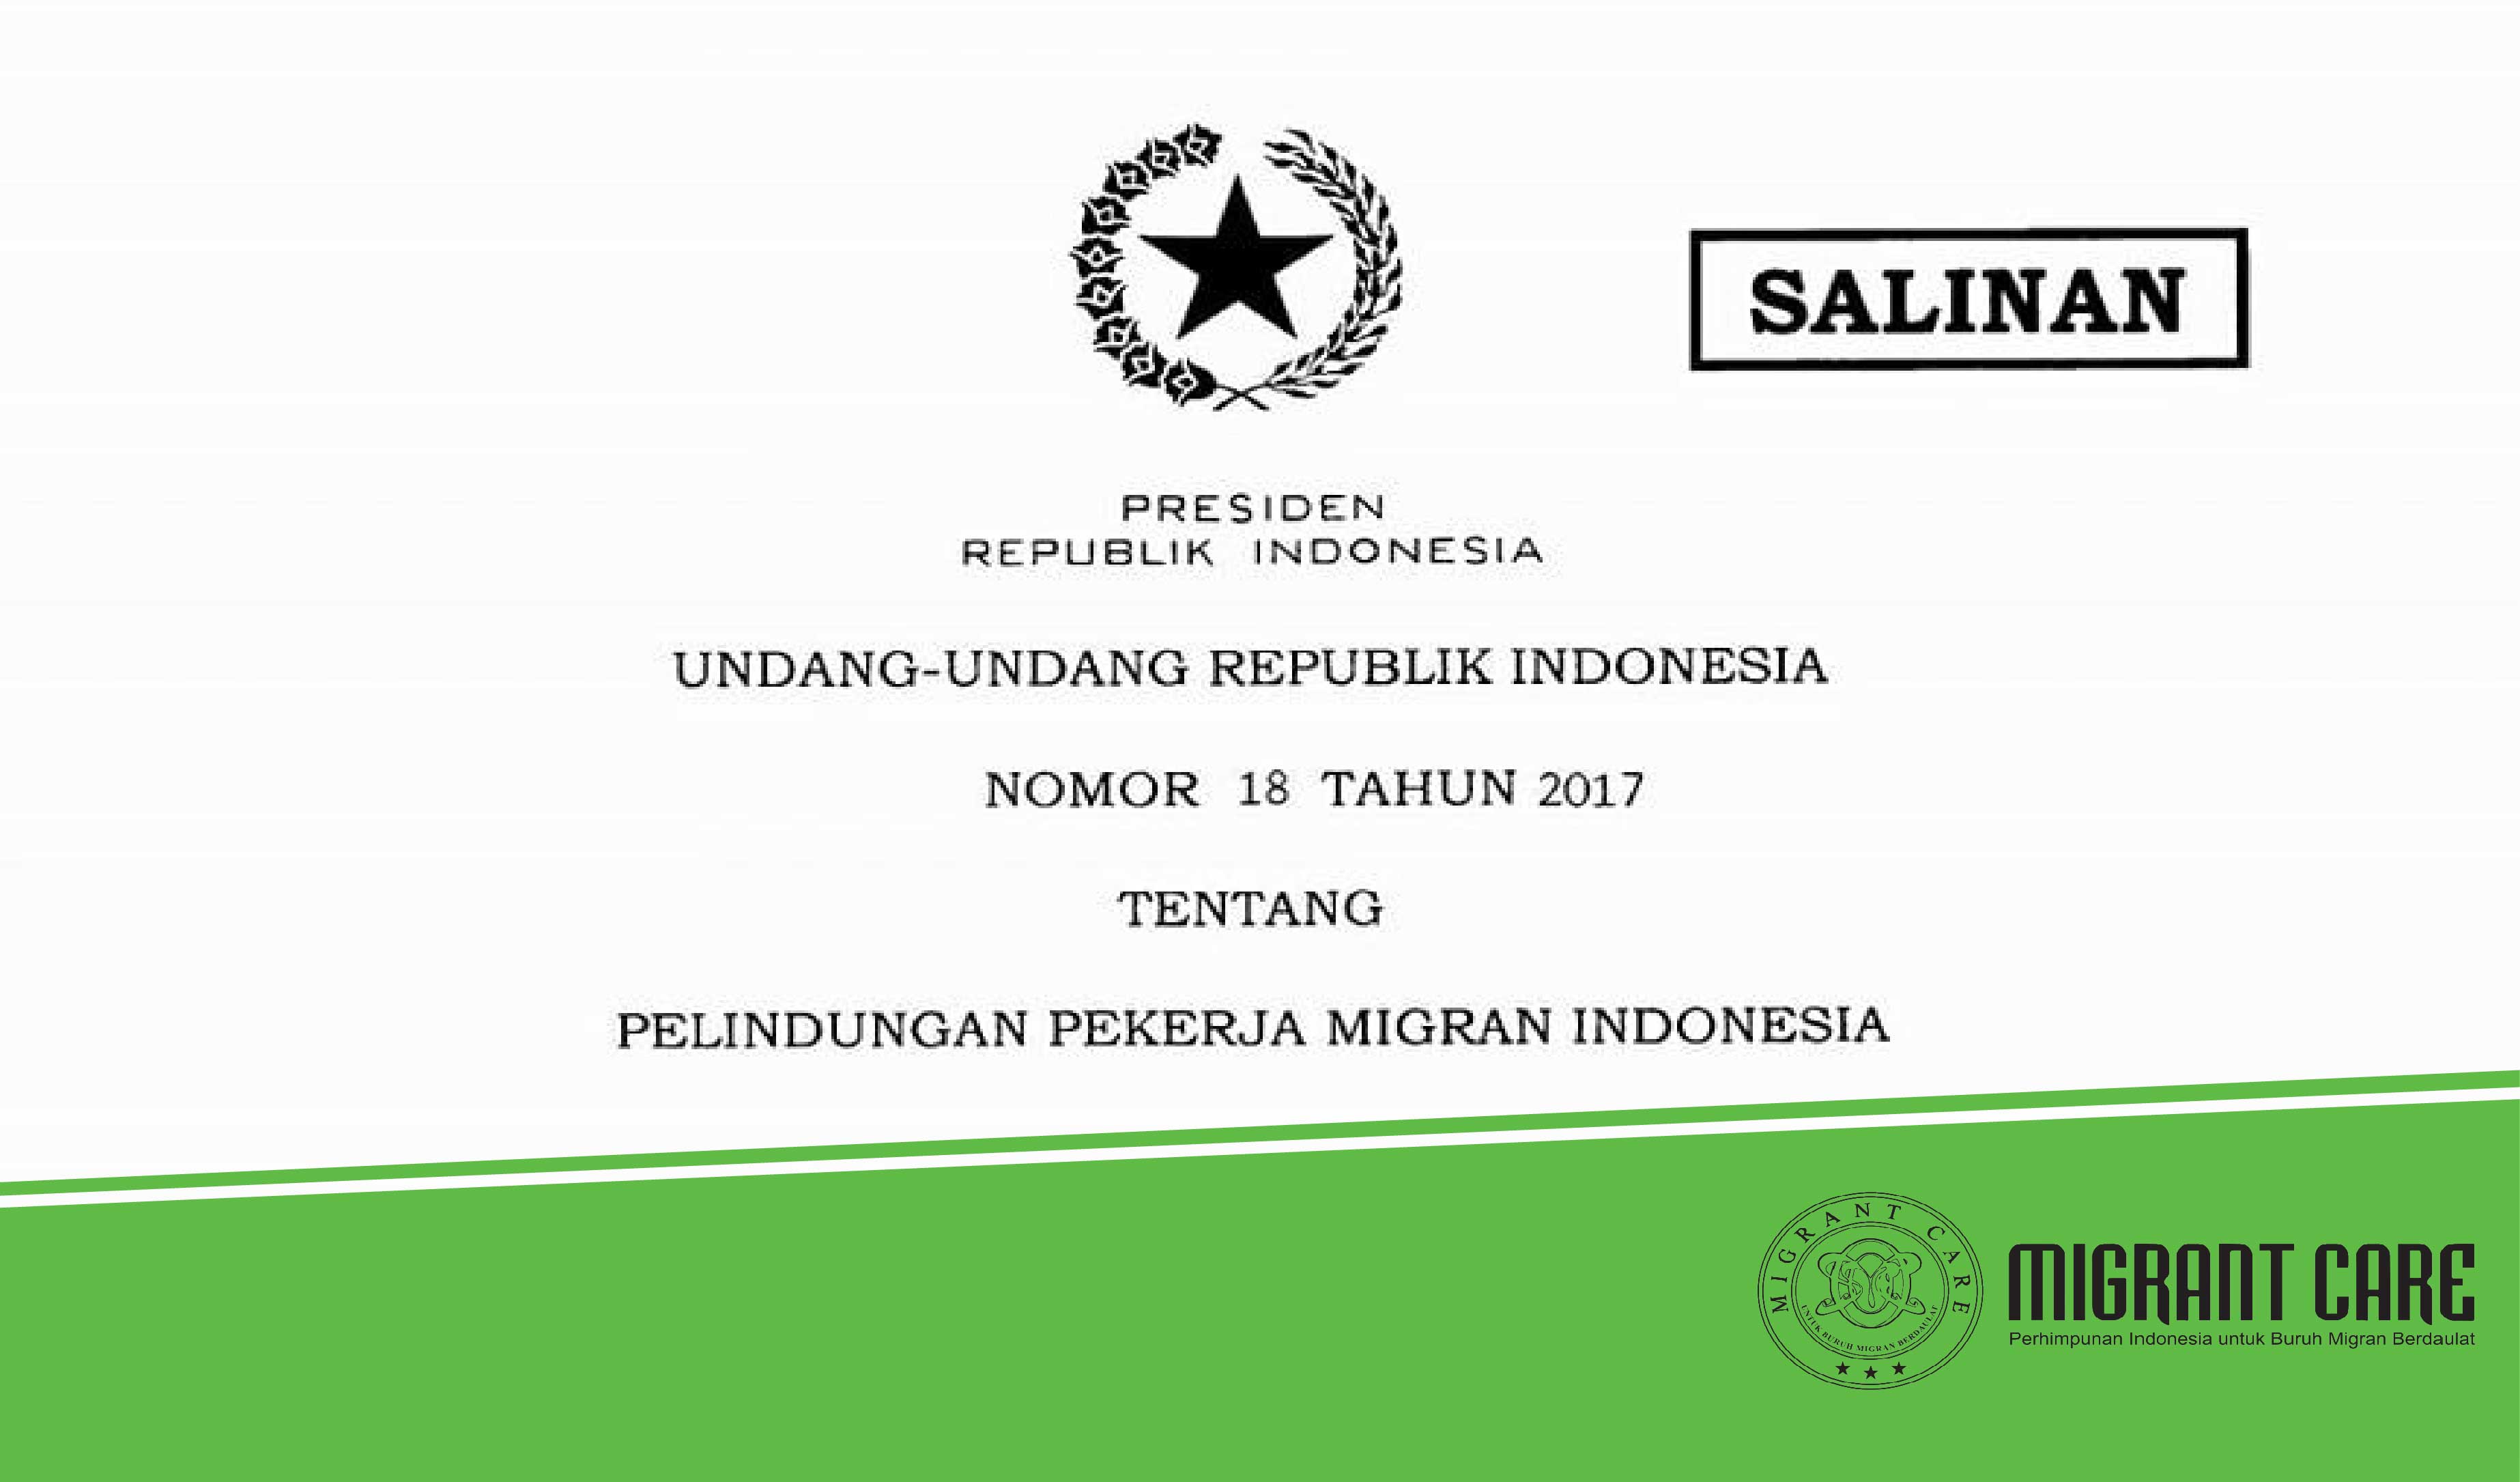 Undang Undang Nomor 18 Tahun 2017 Tentang Pelindungan Pekerja Migran Indonesia